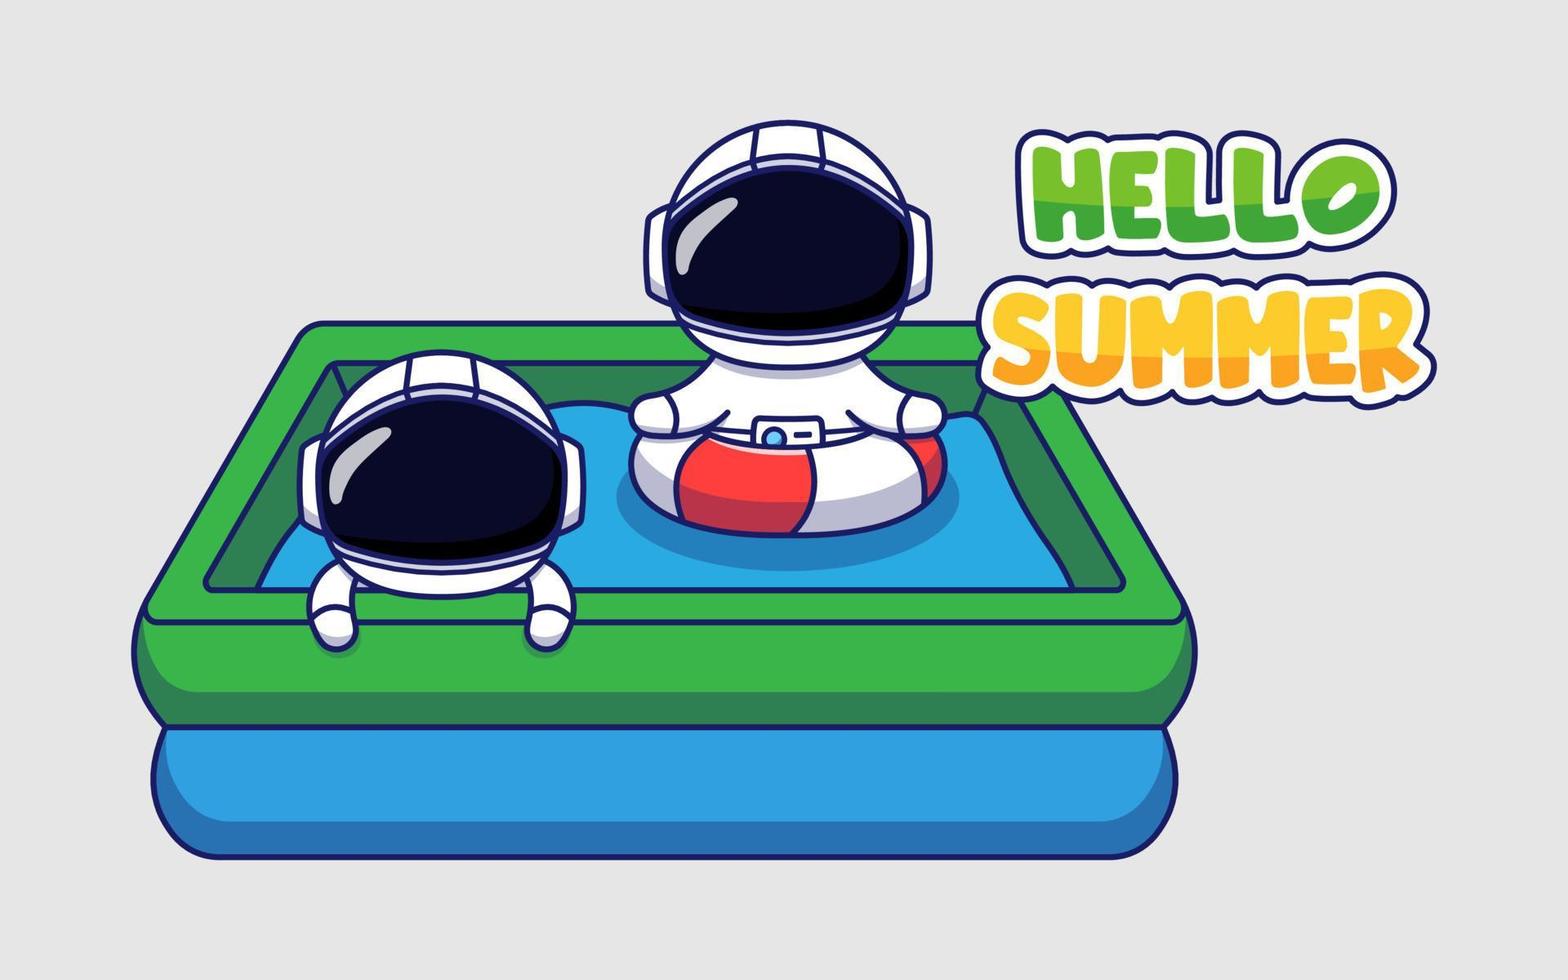 lindo astronauta con pancarta de saludo de hola verano vector